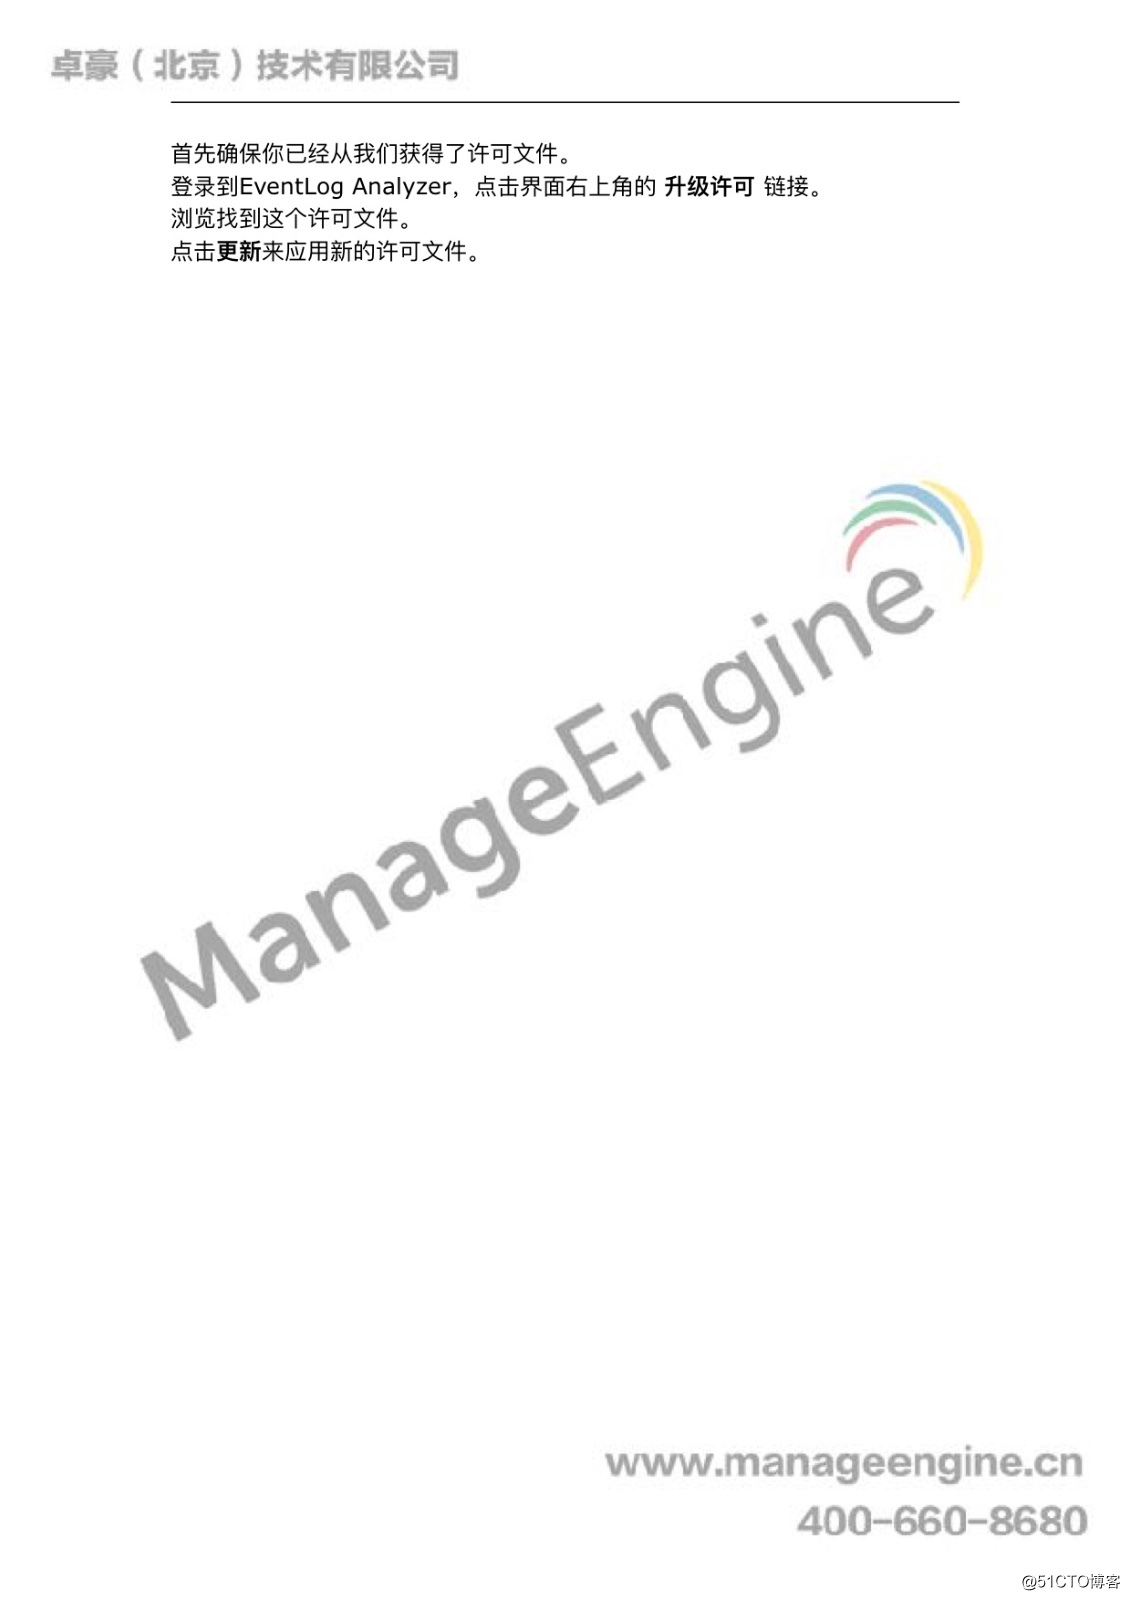 ManageEngine的EventLog Analyzer许可信息